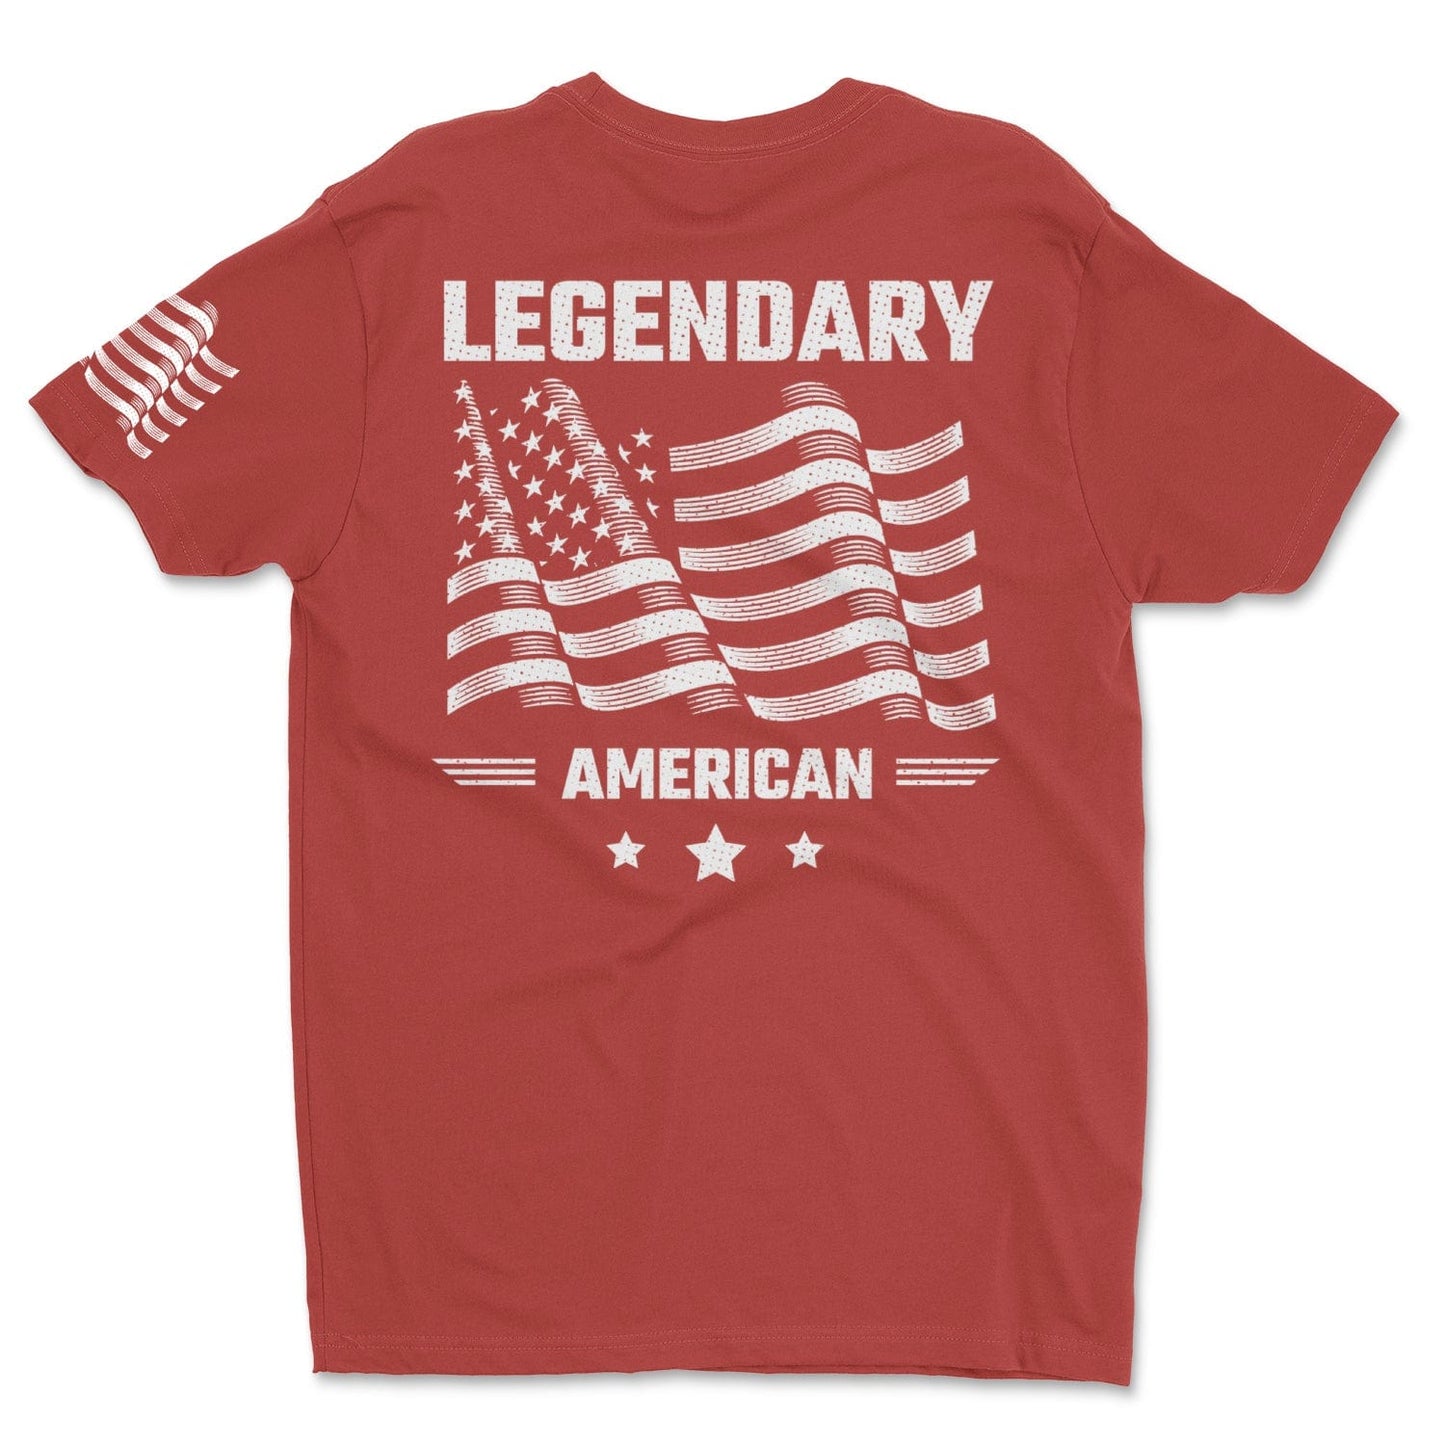 Legendary ltd. T SHIRT Legendary American